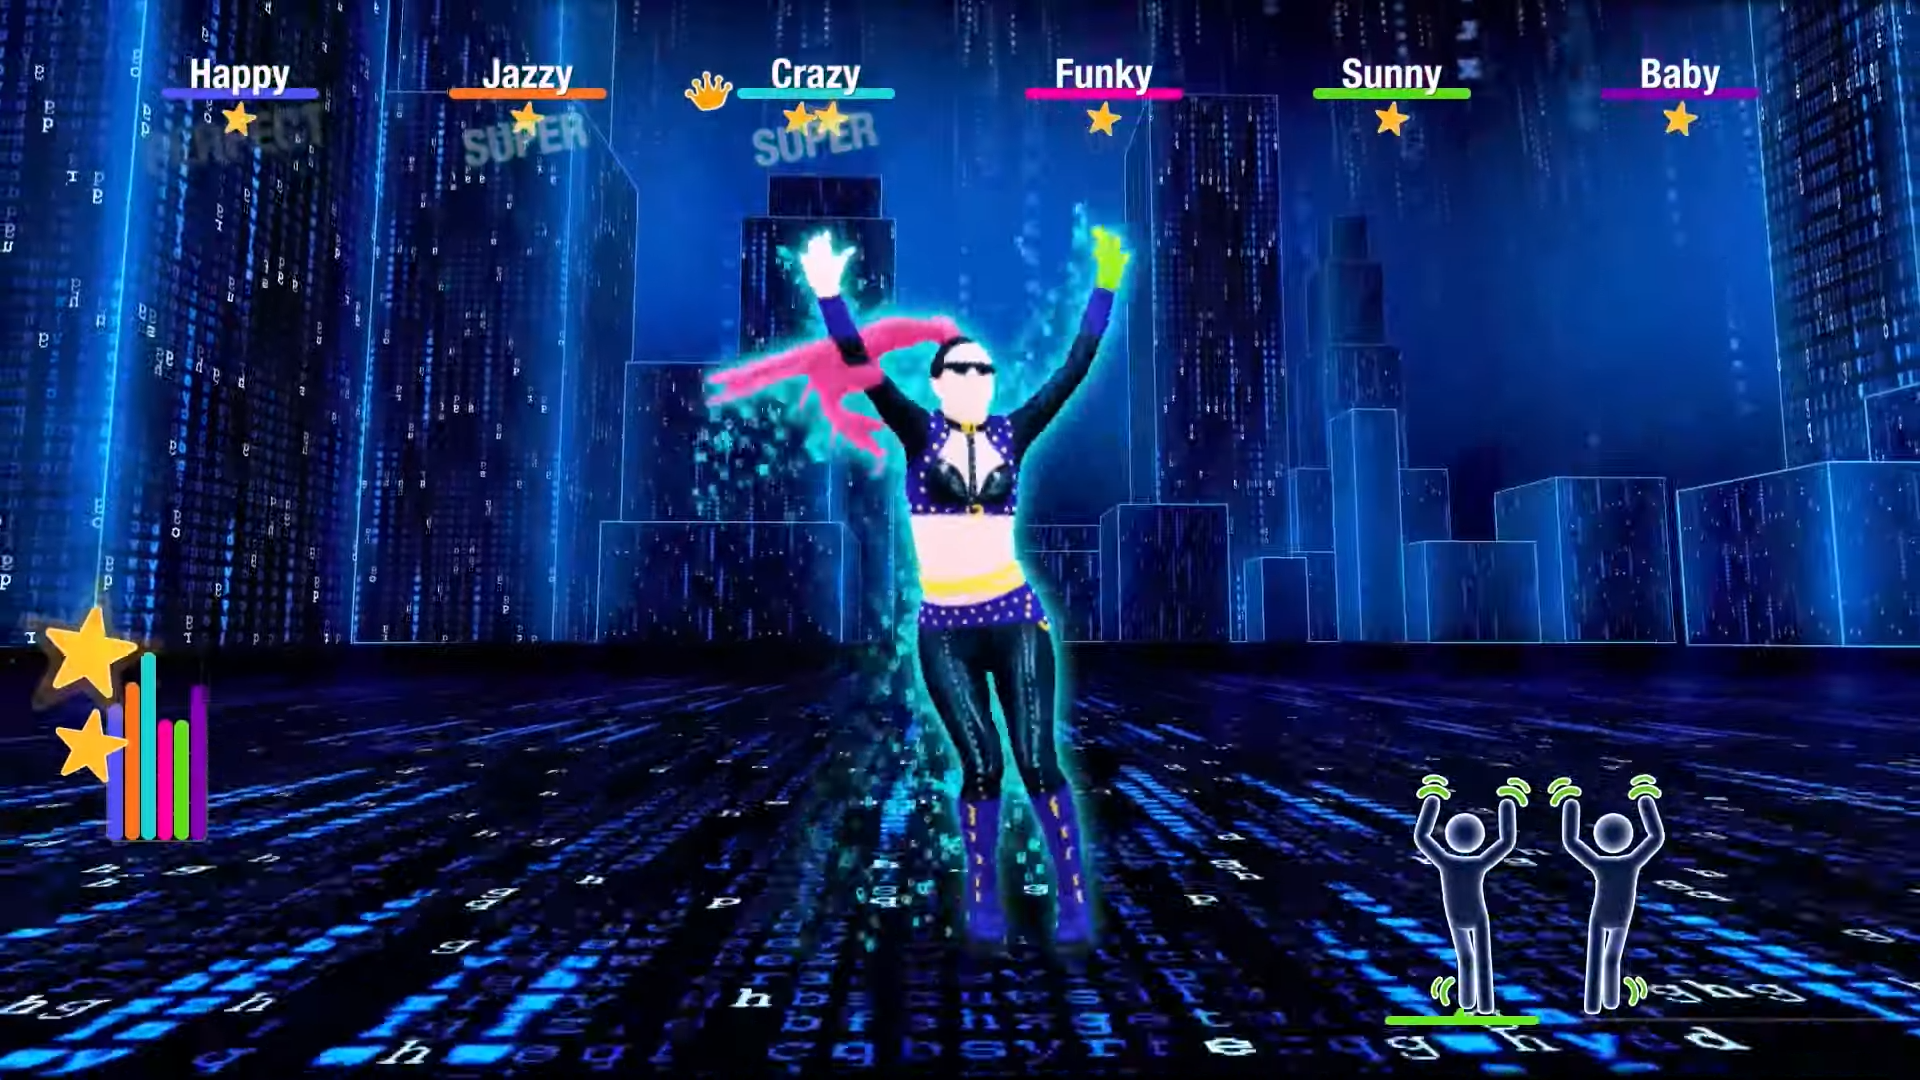 Just Dance 2020: The Girly Team - Twist and Shake it (MEGASTAR